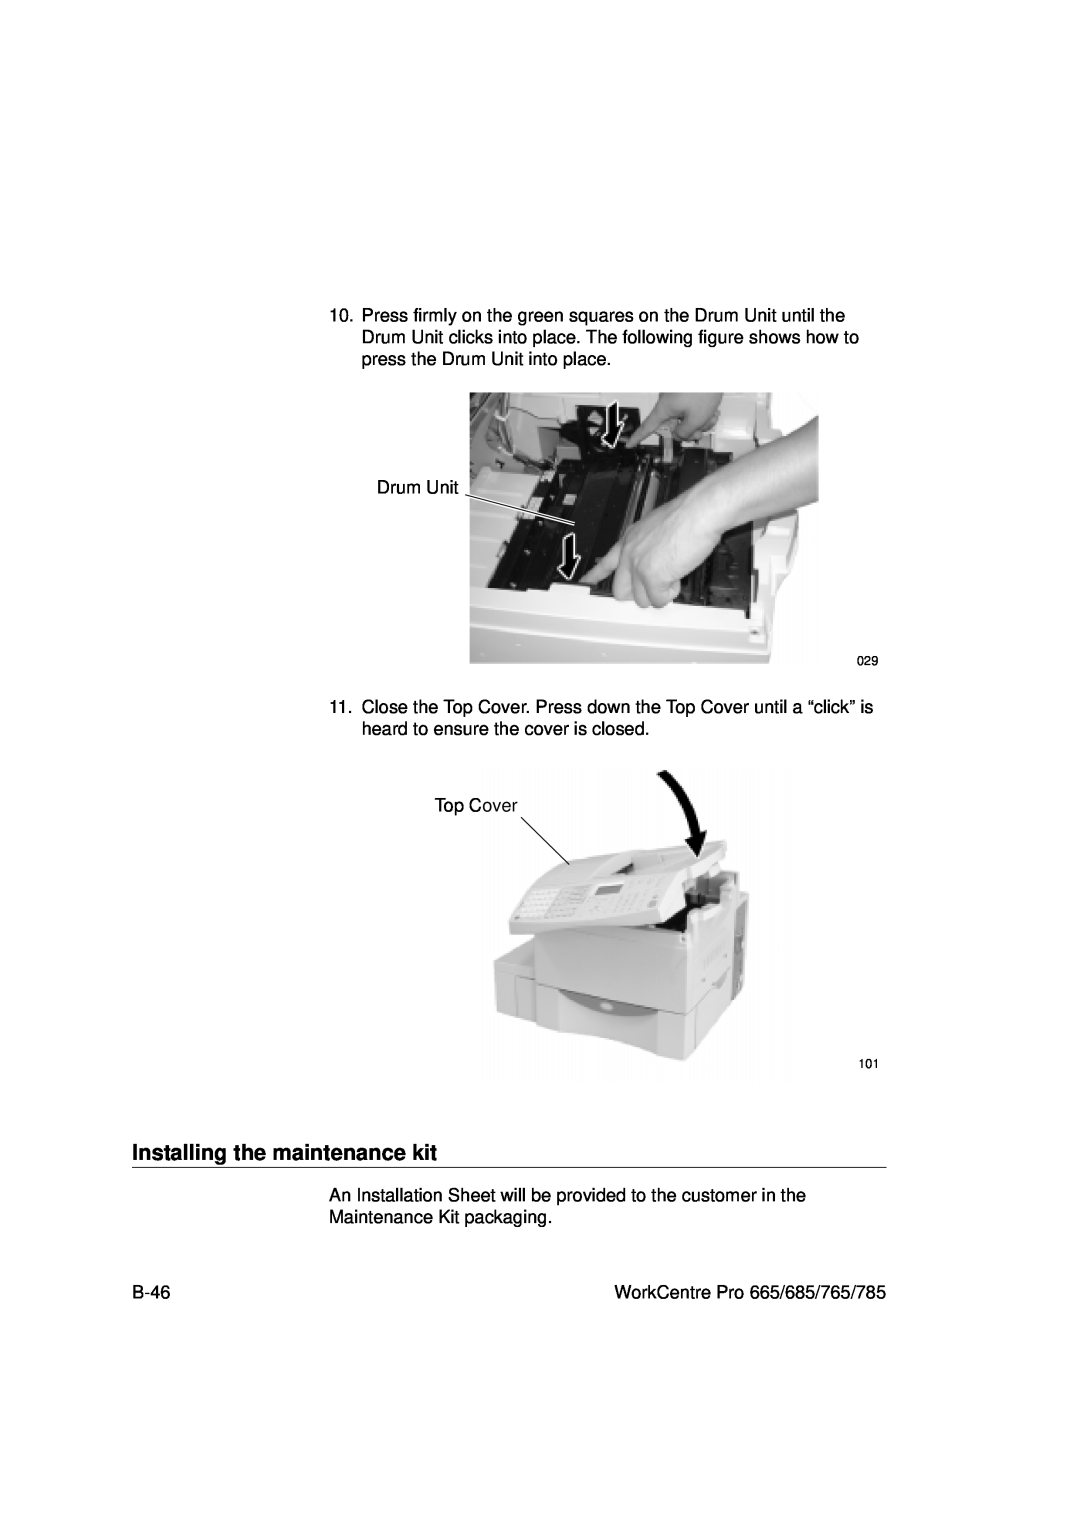 Xerox 765, 665, 685, 785 manual Installing the maintenance kit 